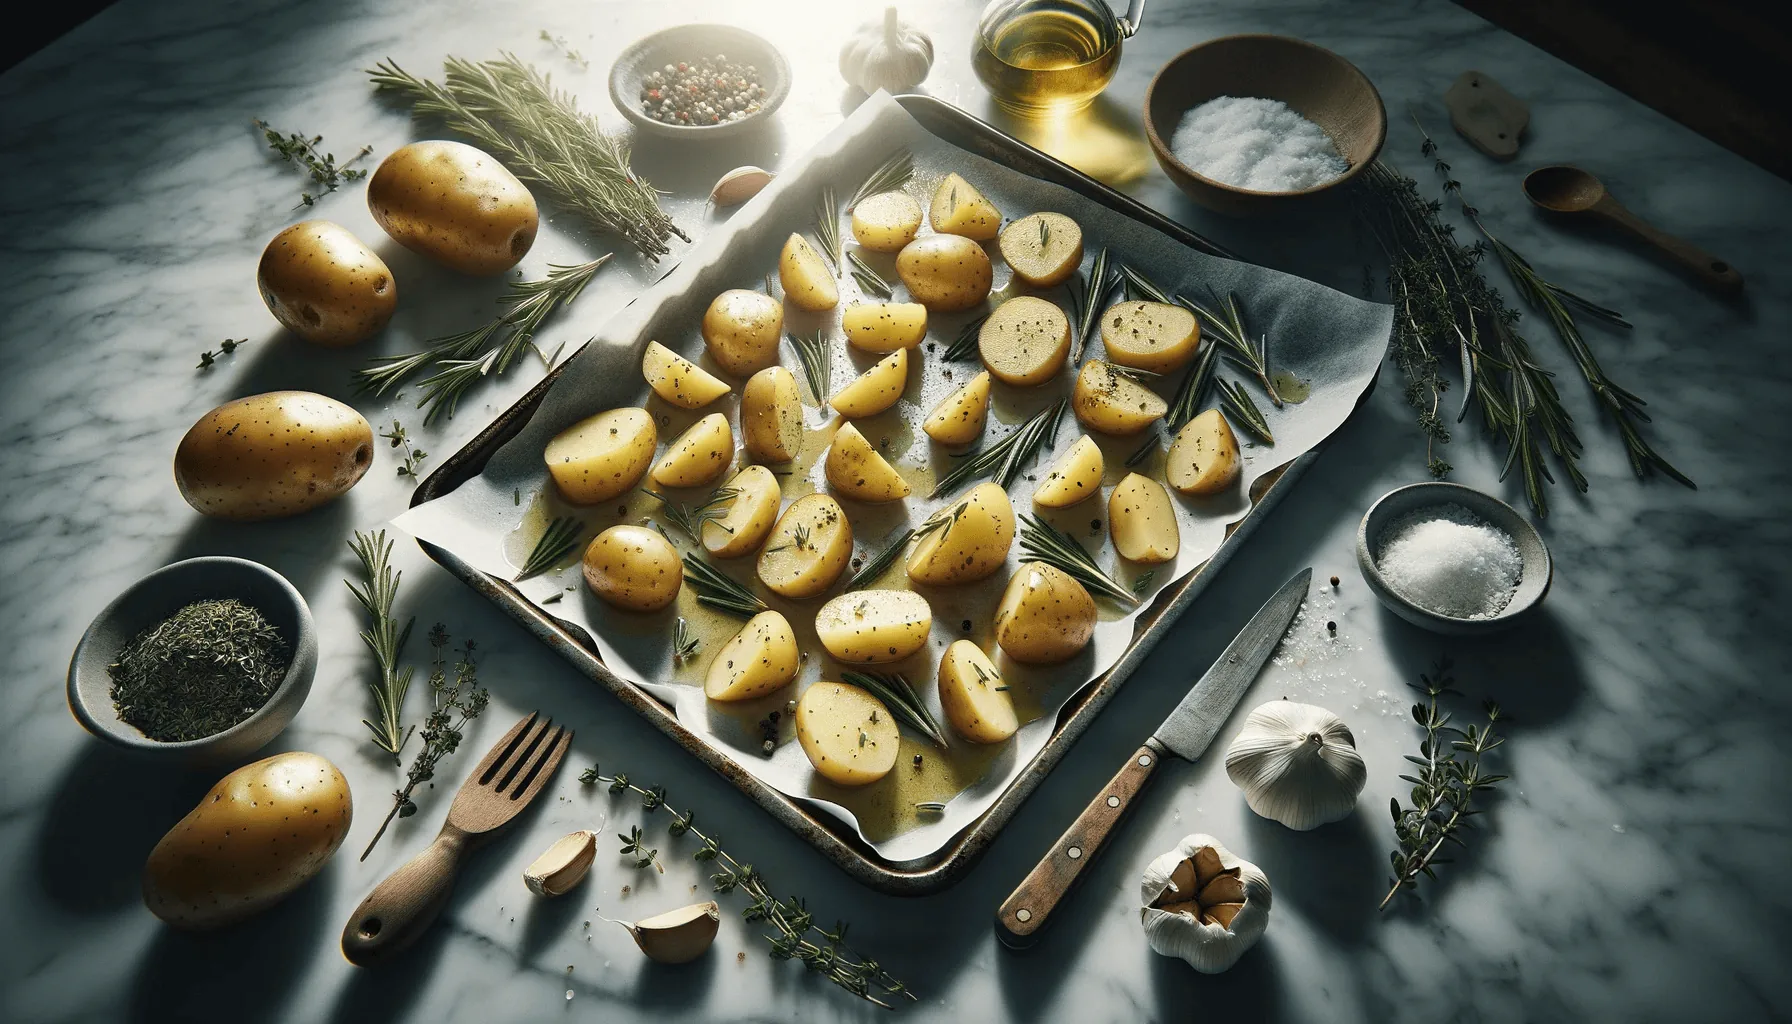 The making of garlic roasted potatoes